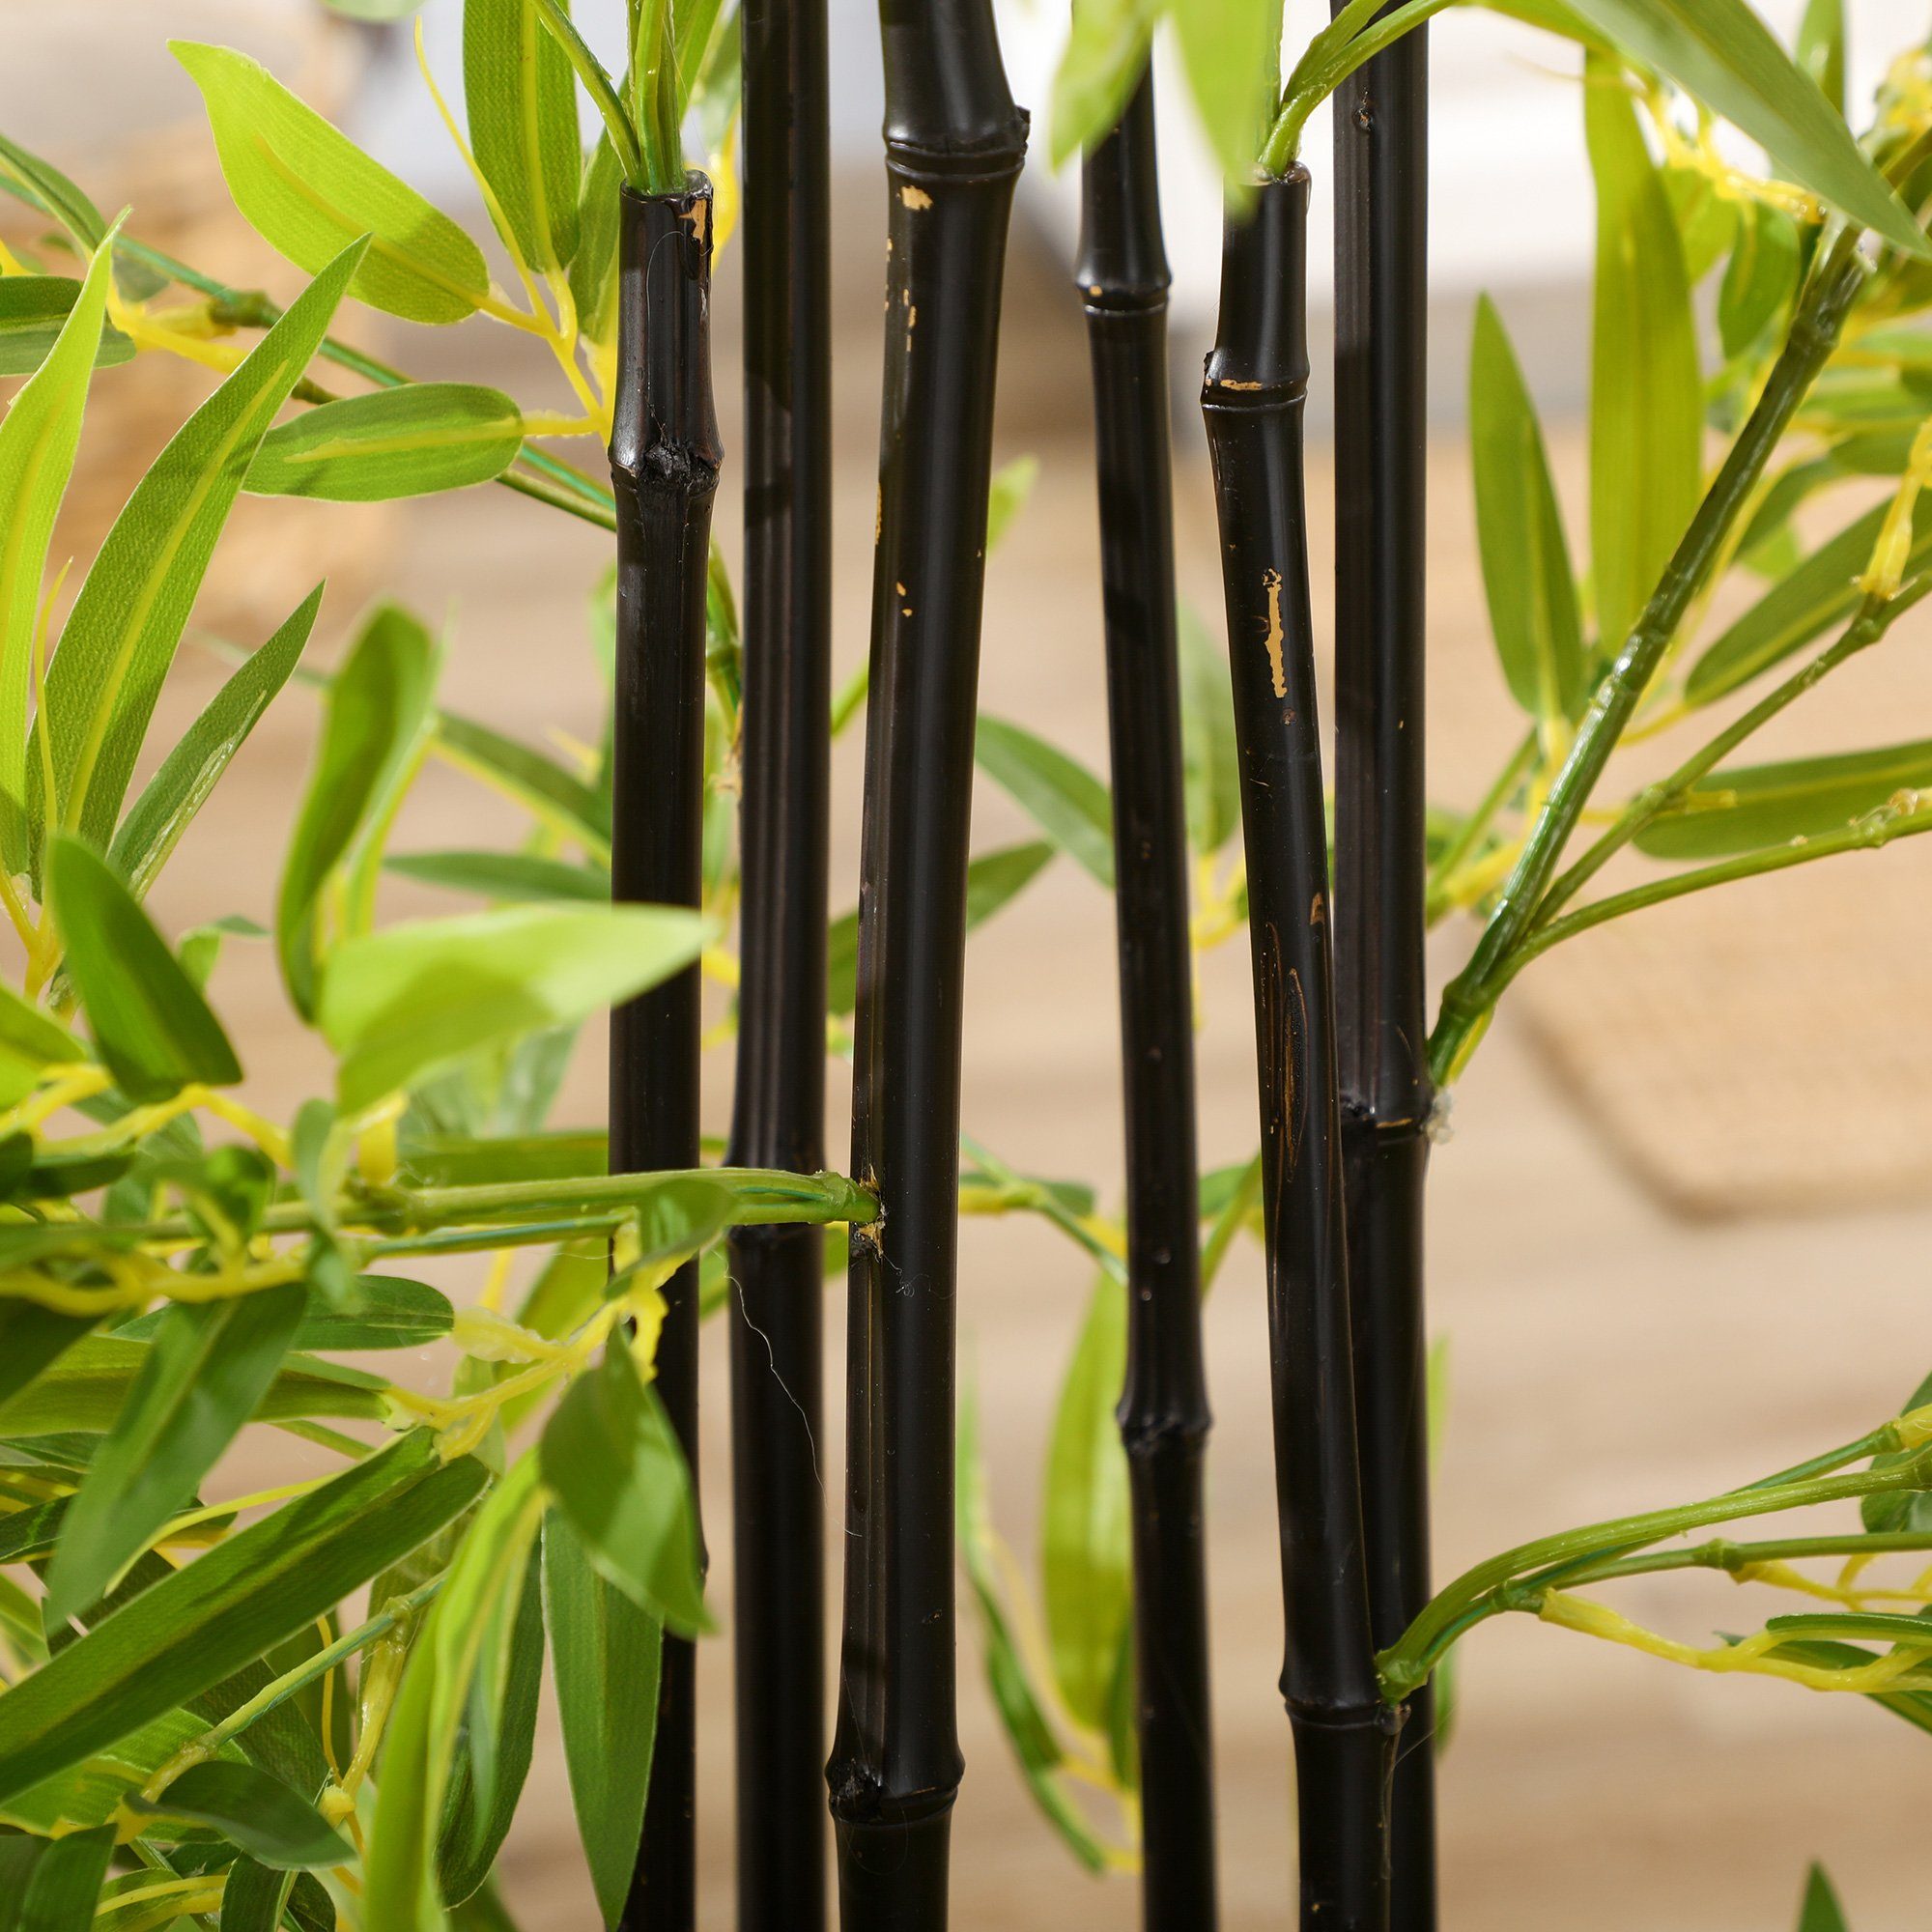 HOMCOM, cm, künstliche inkl. 150 Übertopf Pflanze Kunstpflanze Höhe Bambus,